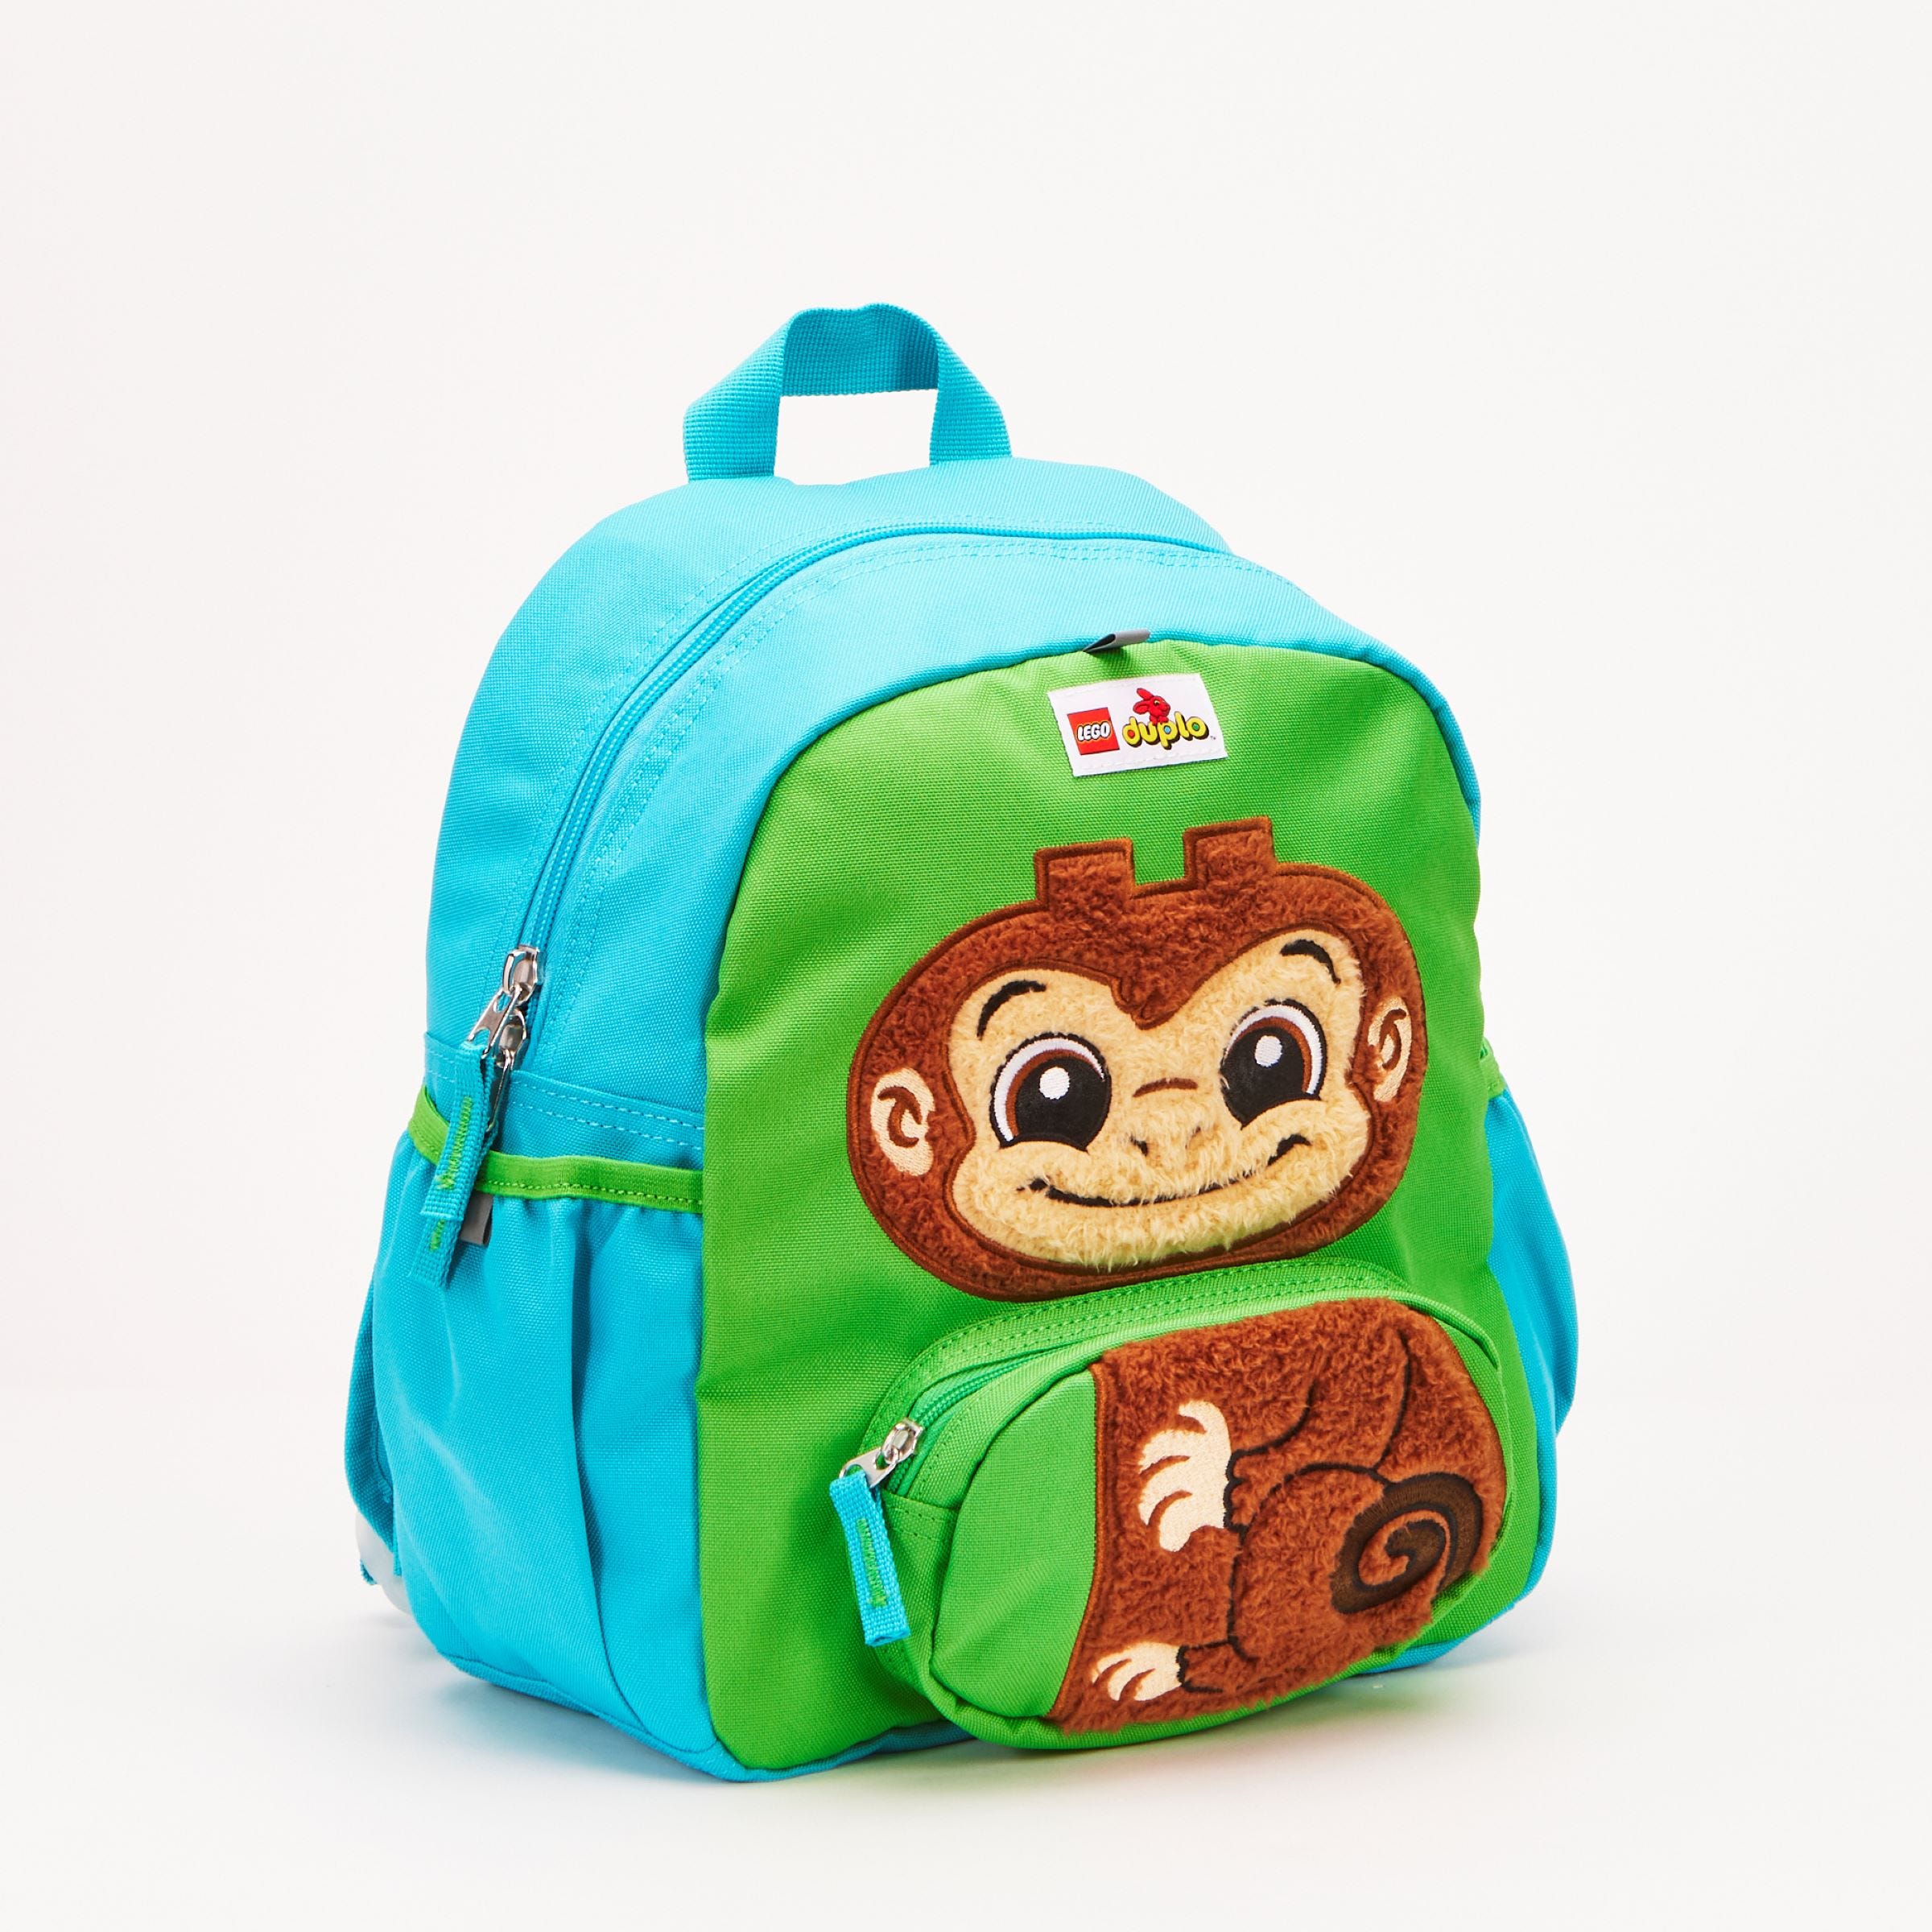 Backpack - Monkey